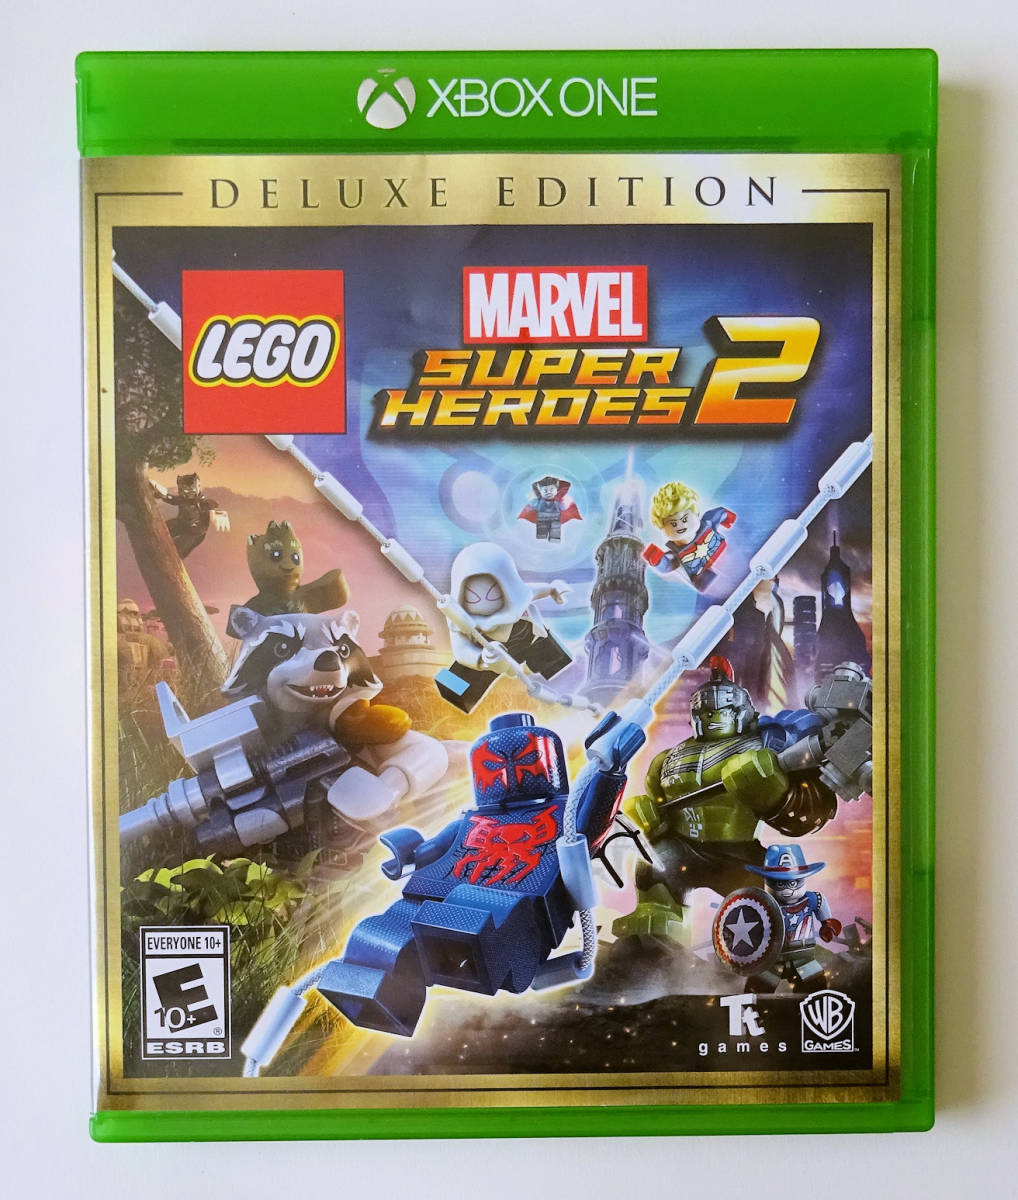  Lego ma- bell super hero z2 LEGO MARVEL SUPER HEROES 2 North America version * XBOX ONE / XBOX SERIES X